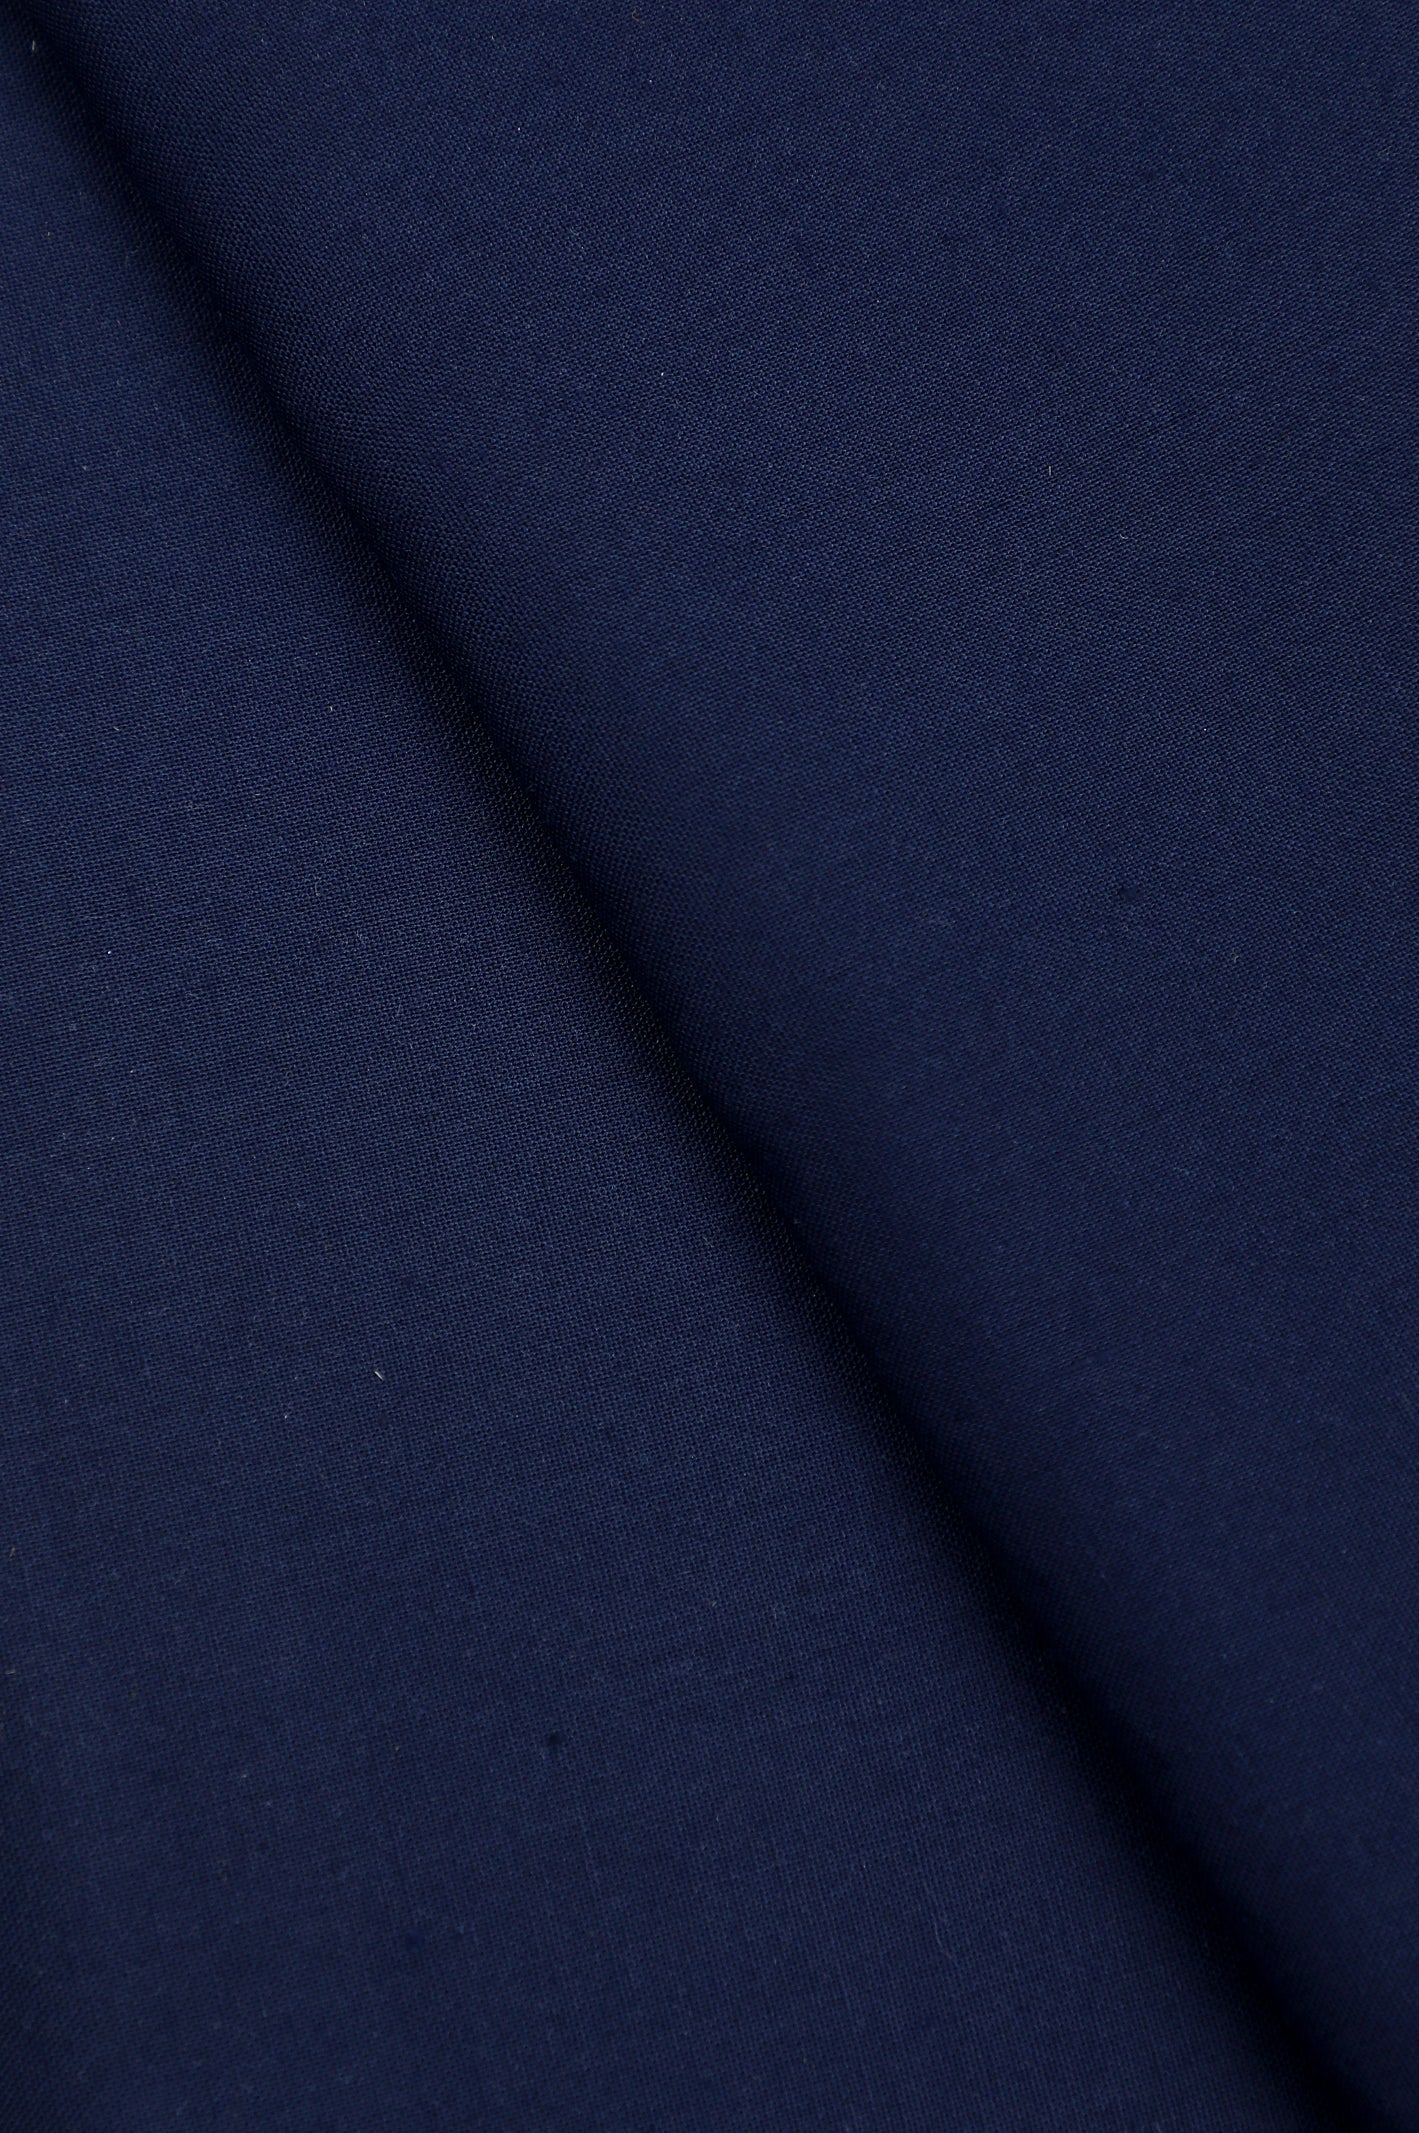 Unstitched Fabric for Men SKU: US0186-N-BLUE - Diners